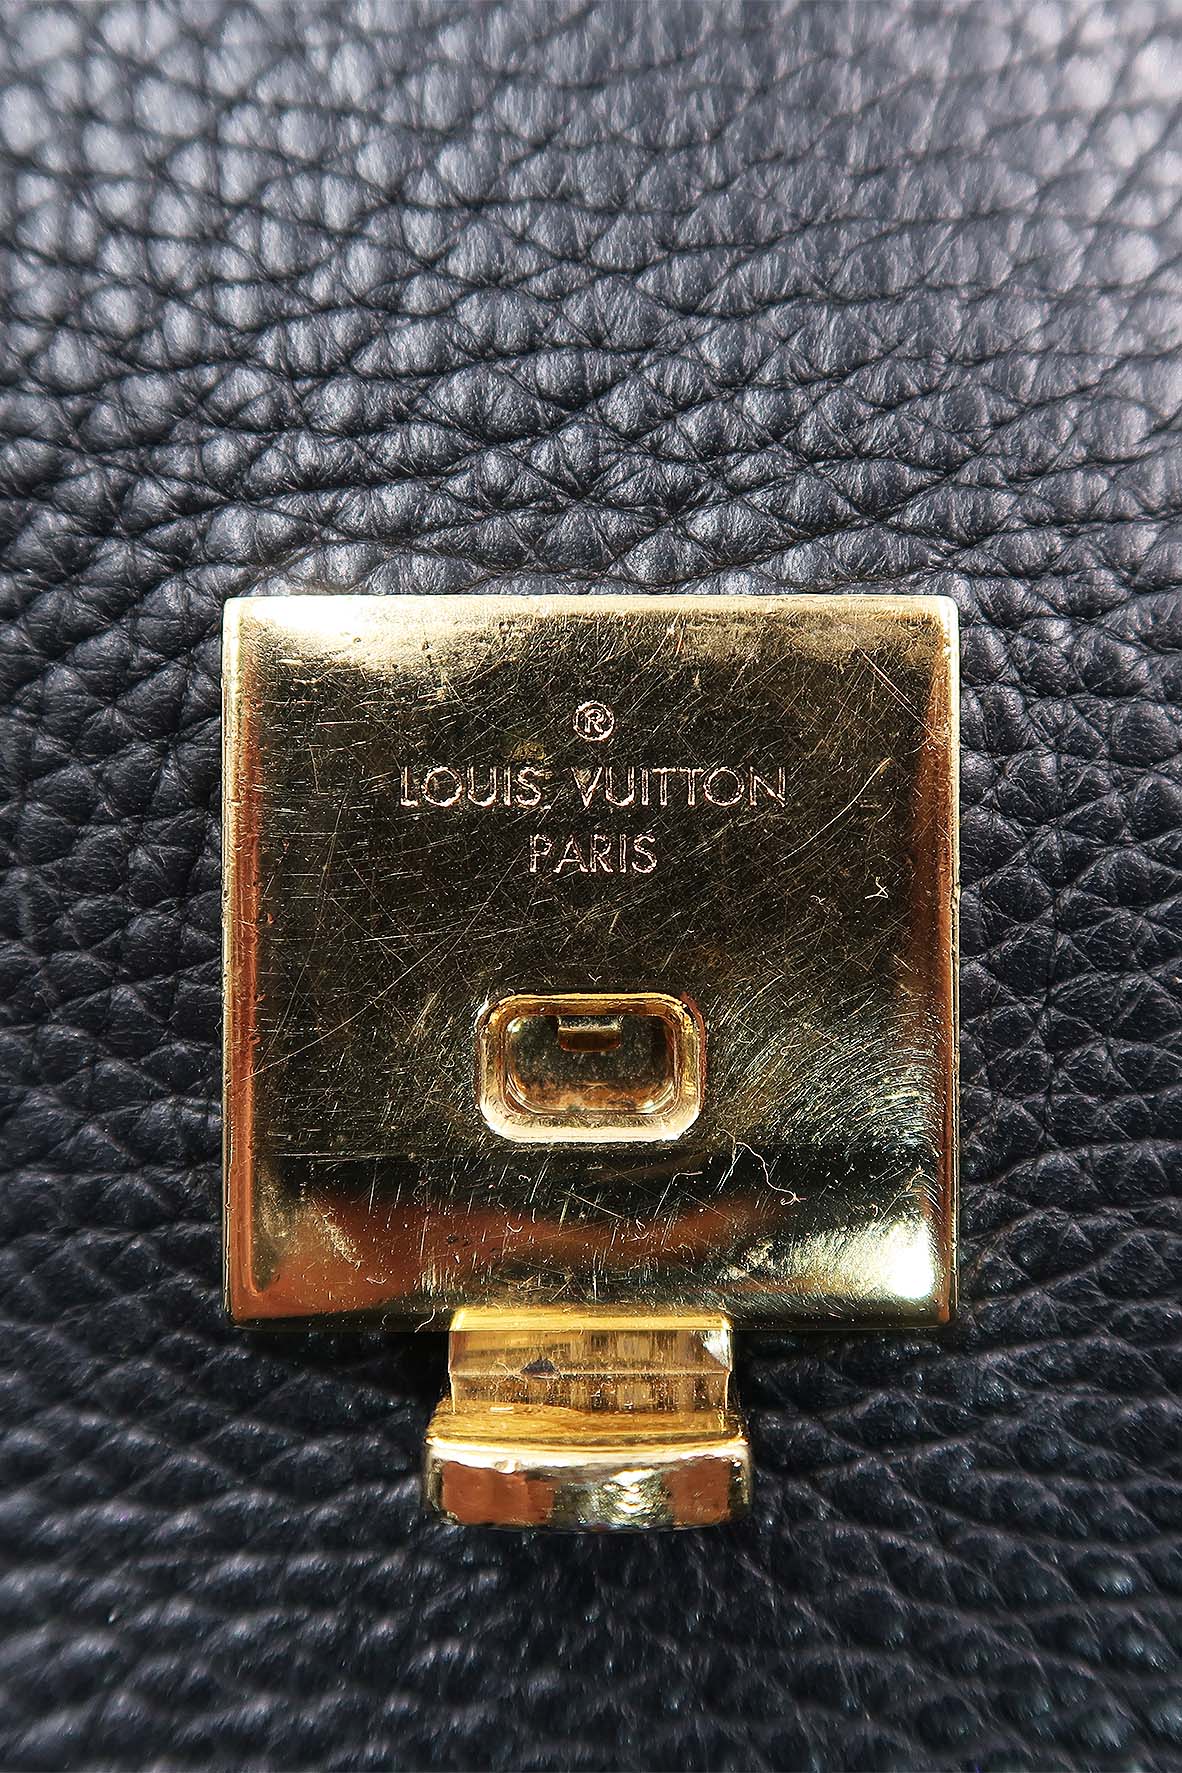 Shop Louis Vuitton TAURILLON Cabas voyage (M57290) by 環-WA